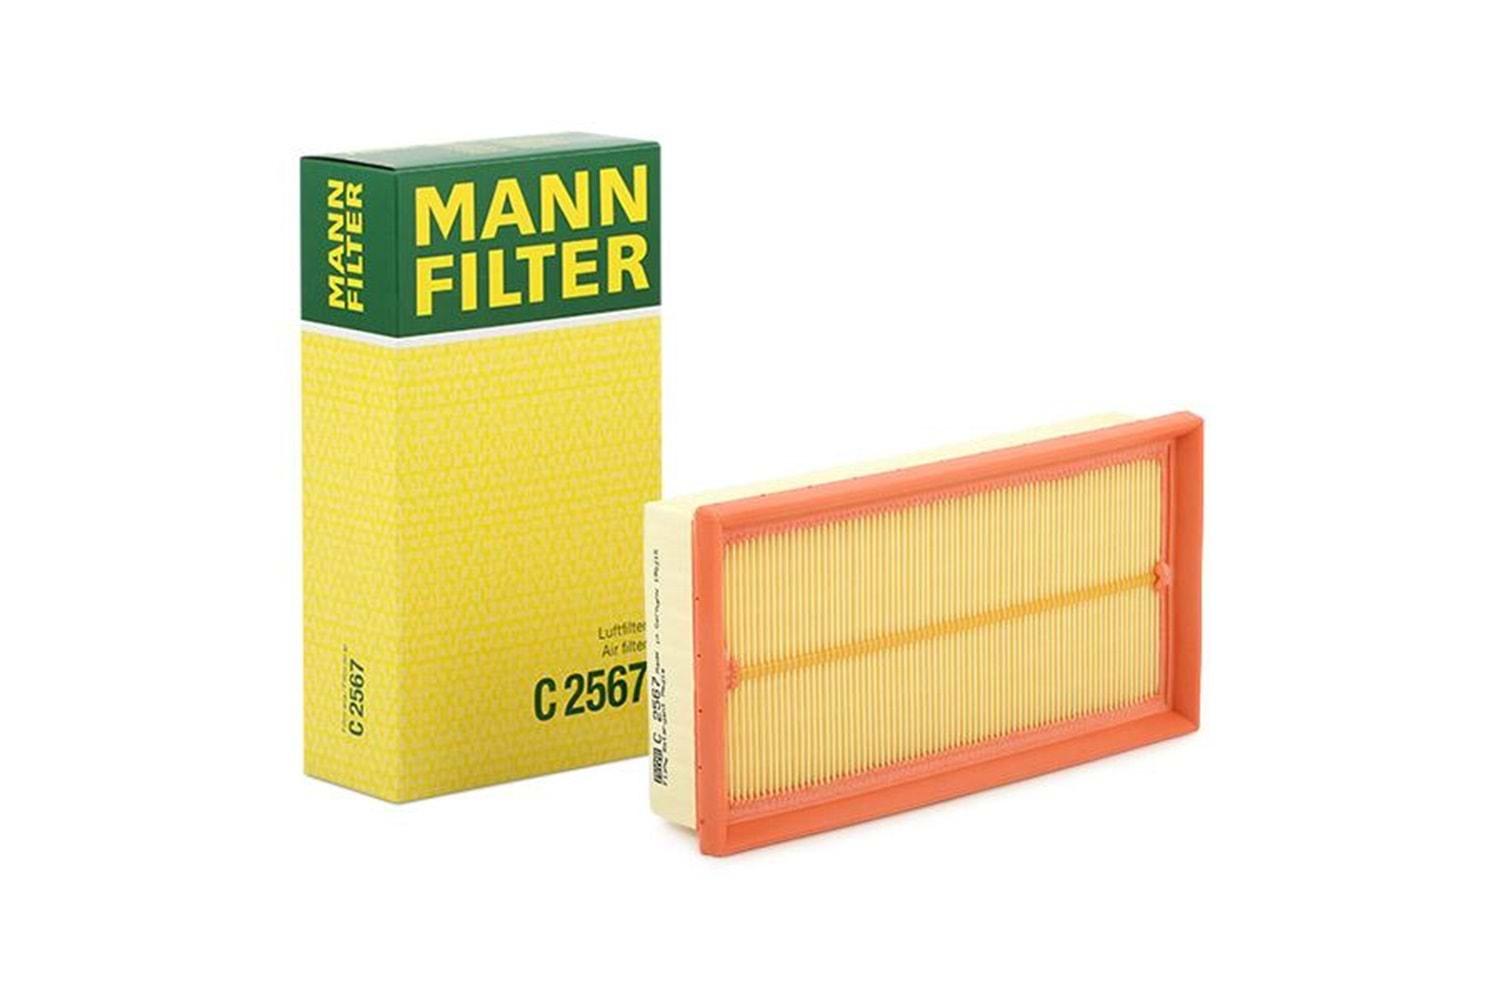 Mann Filter Hava Filtresi C2567